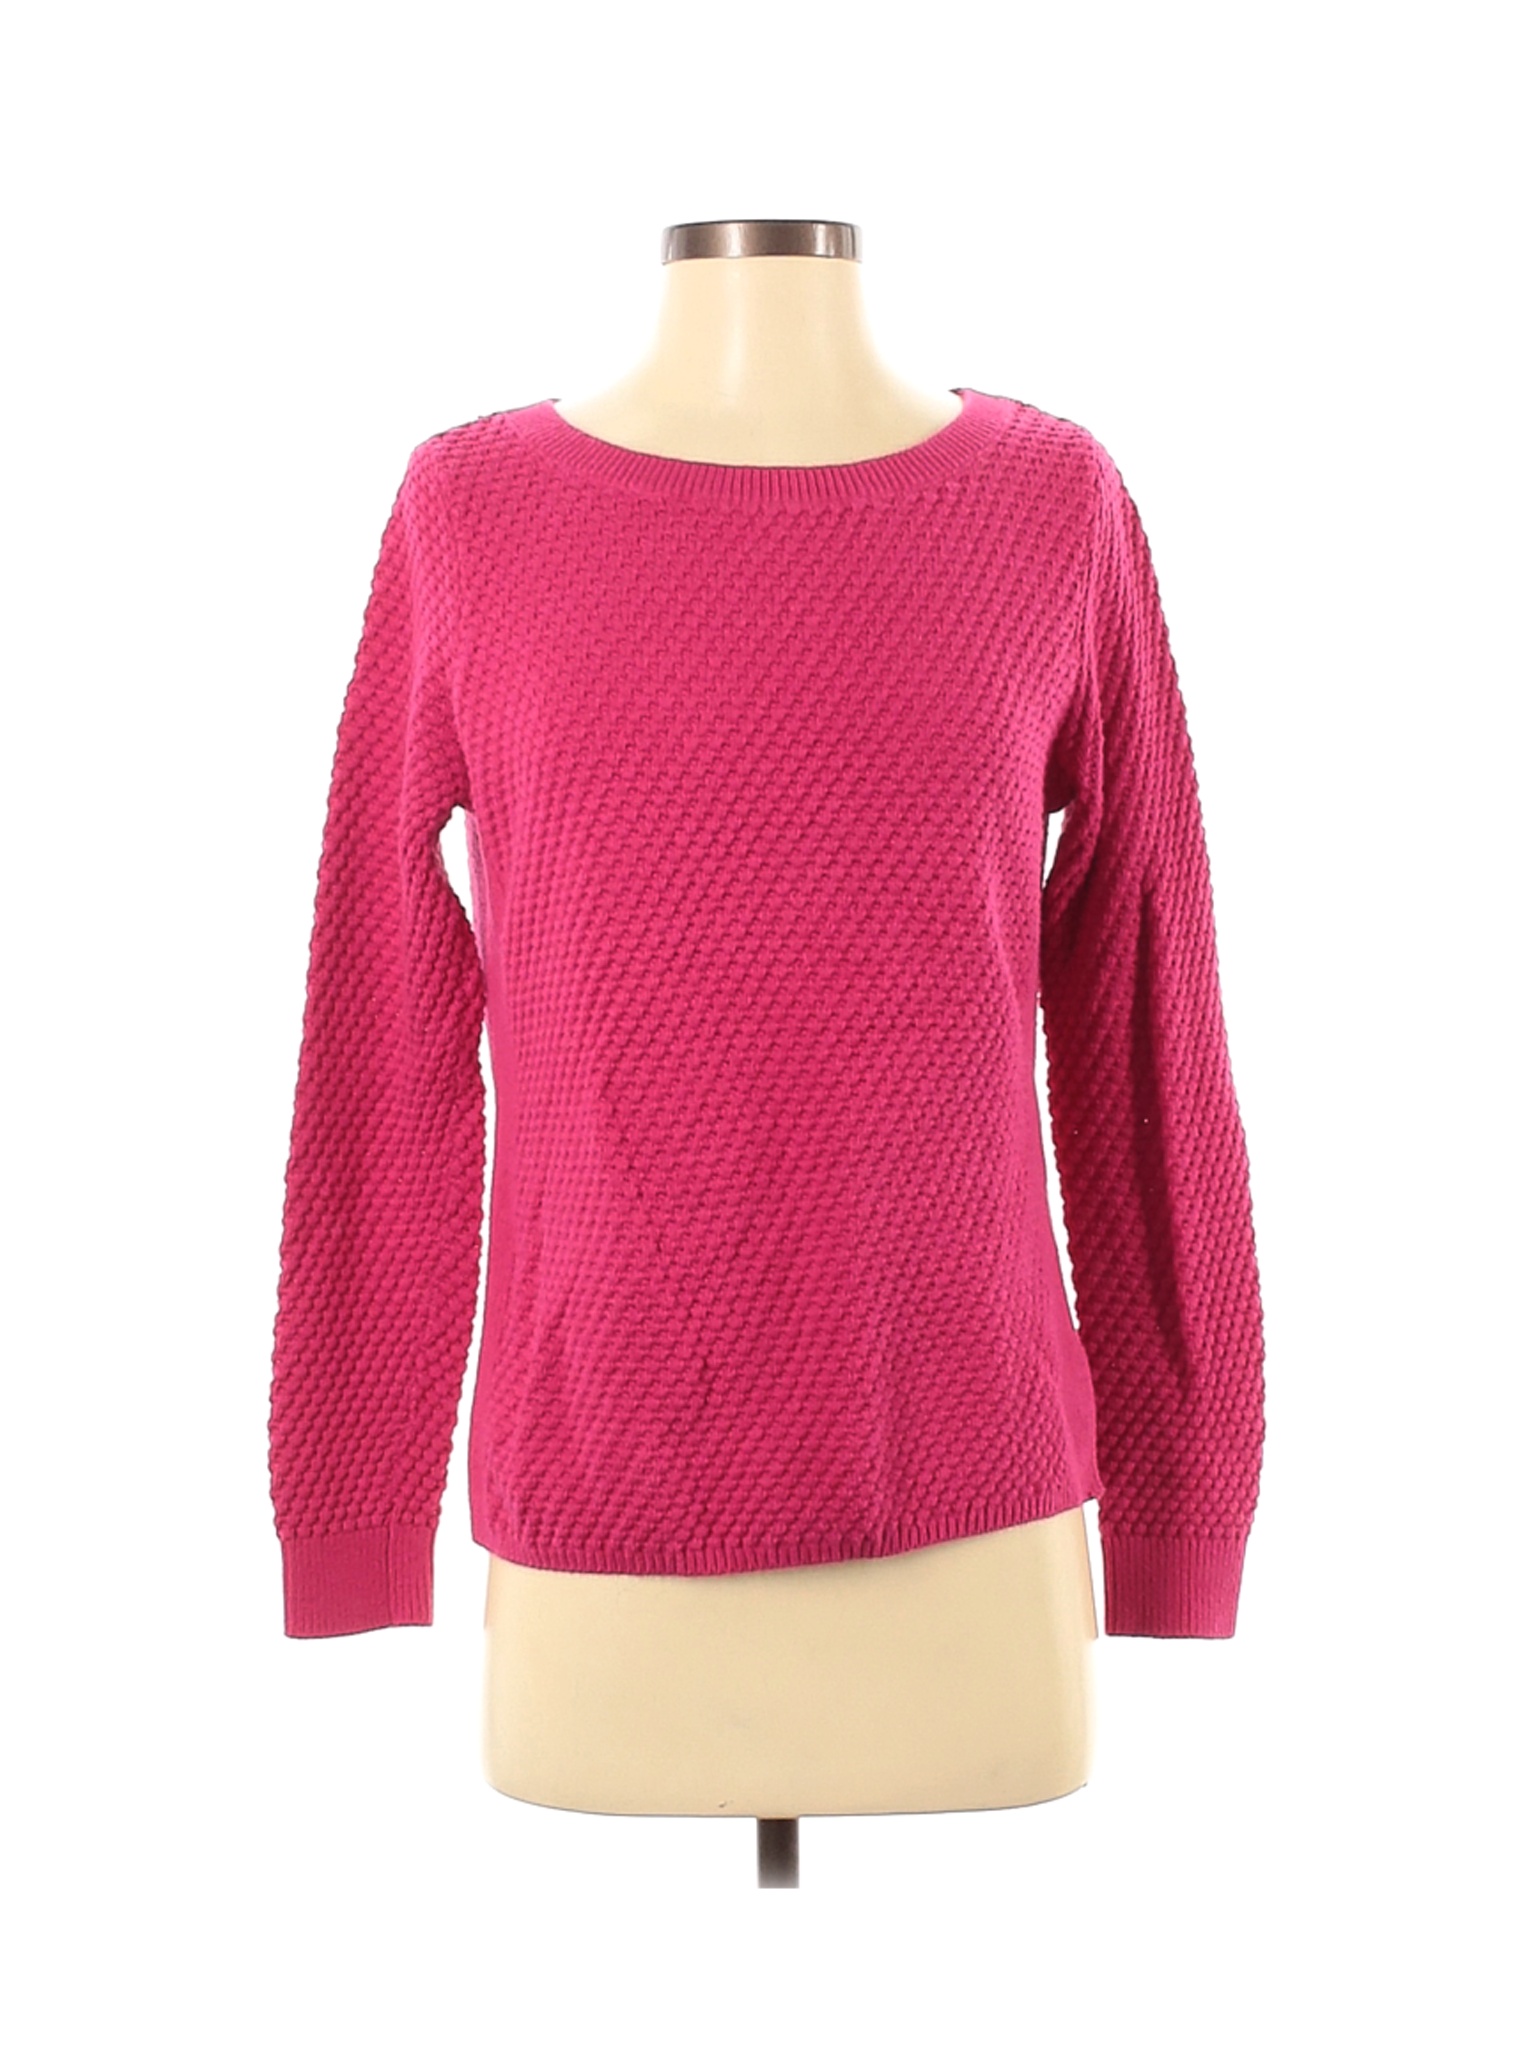 Lands' End Women Pink Pullover Sweater S | eBay